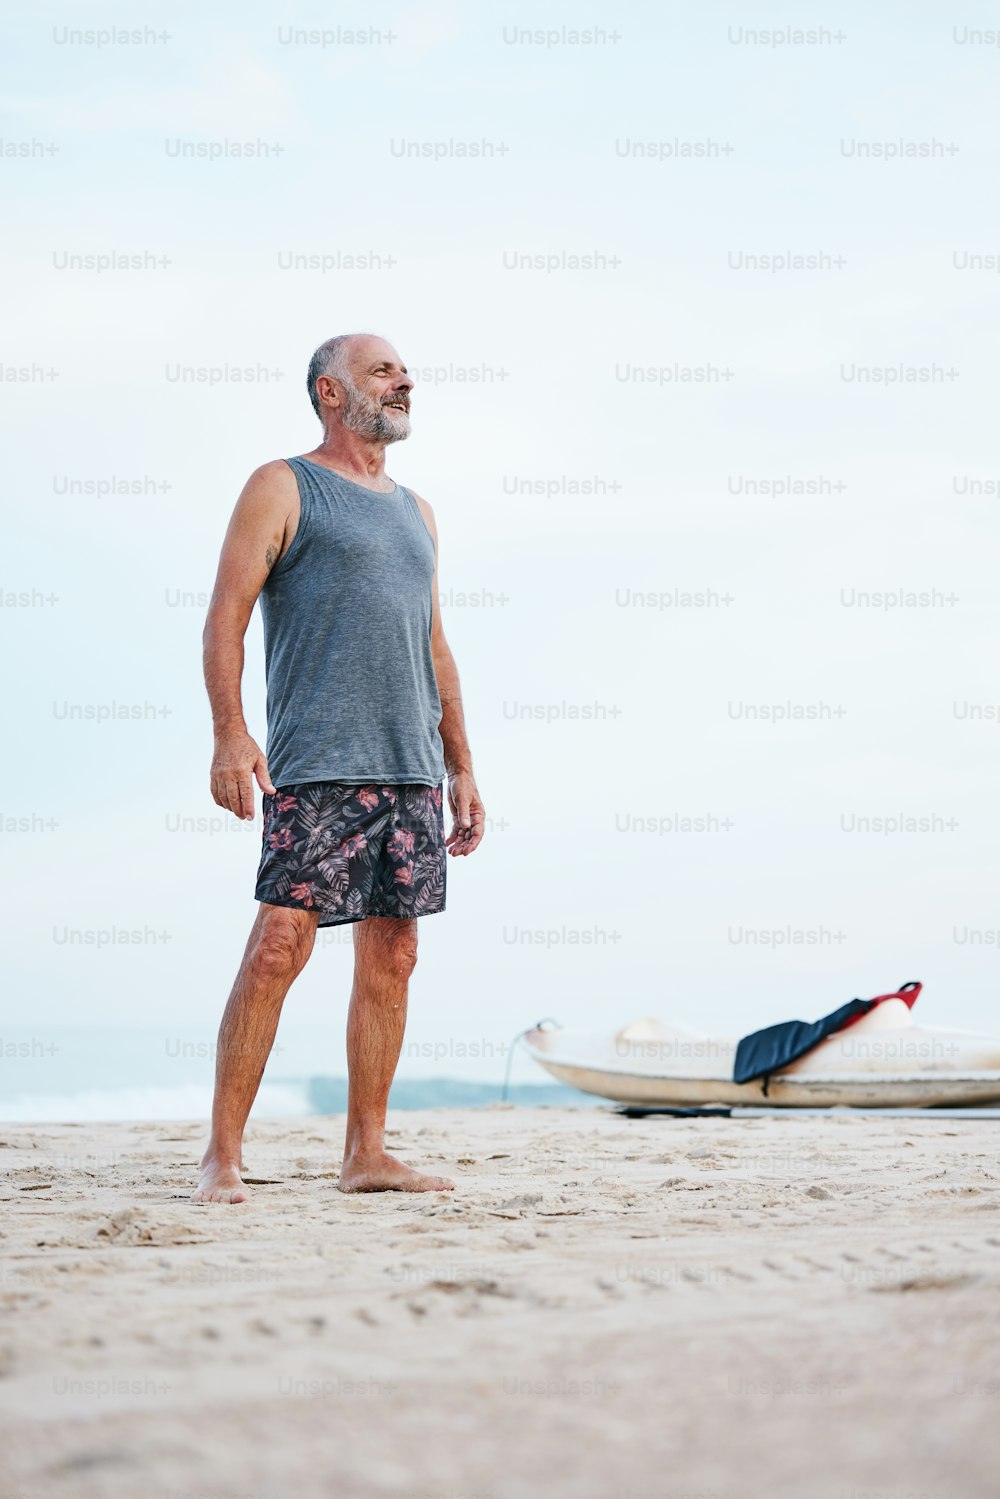 Un uomo in piedi su una spiaggia accanto a una barca